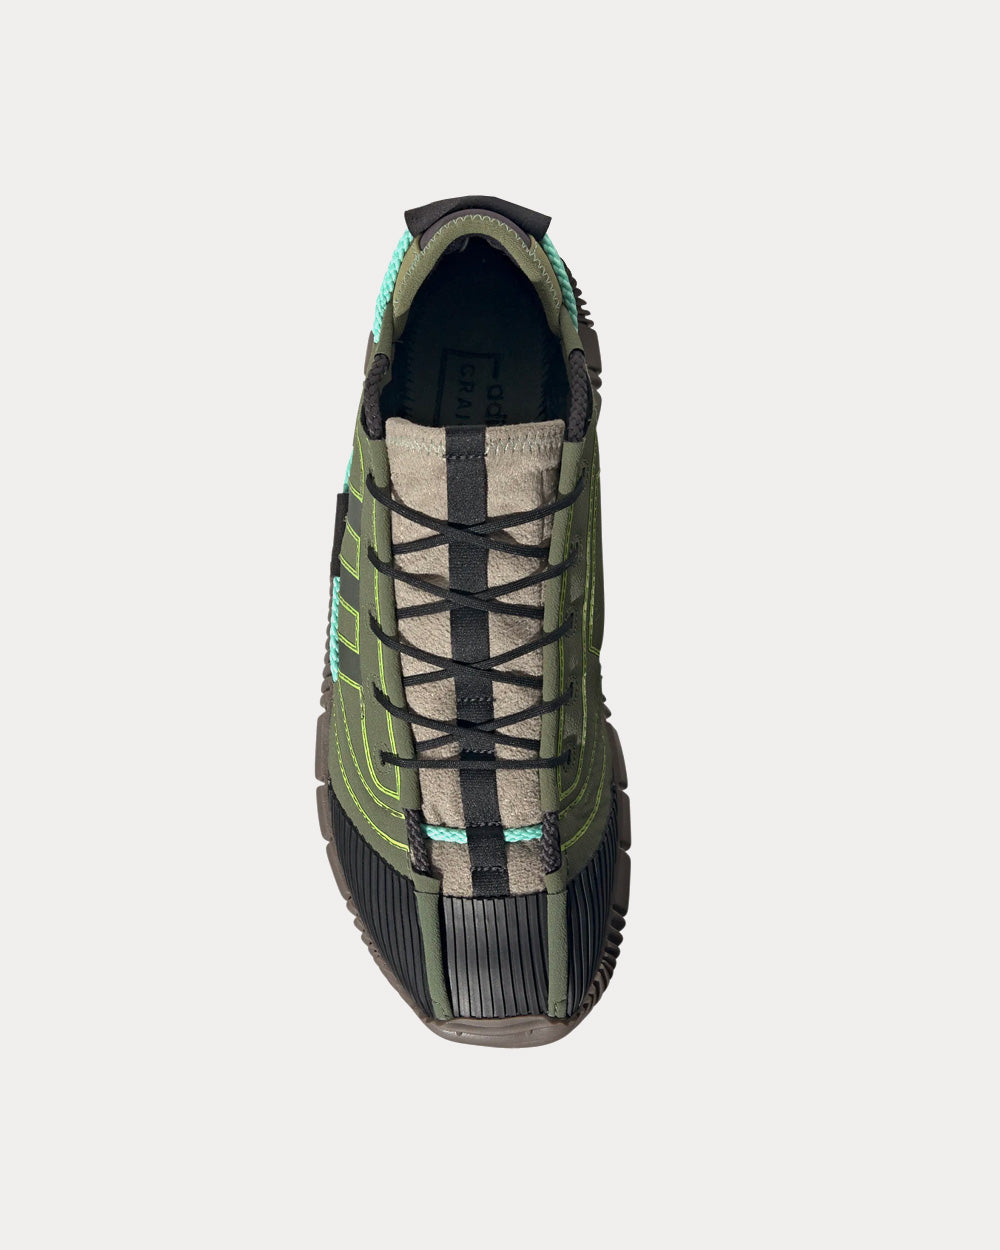 Adidas x Craig Green - Scuba Phormar Wild Pine Low Top Sneakers